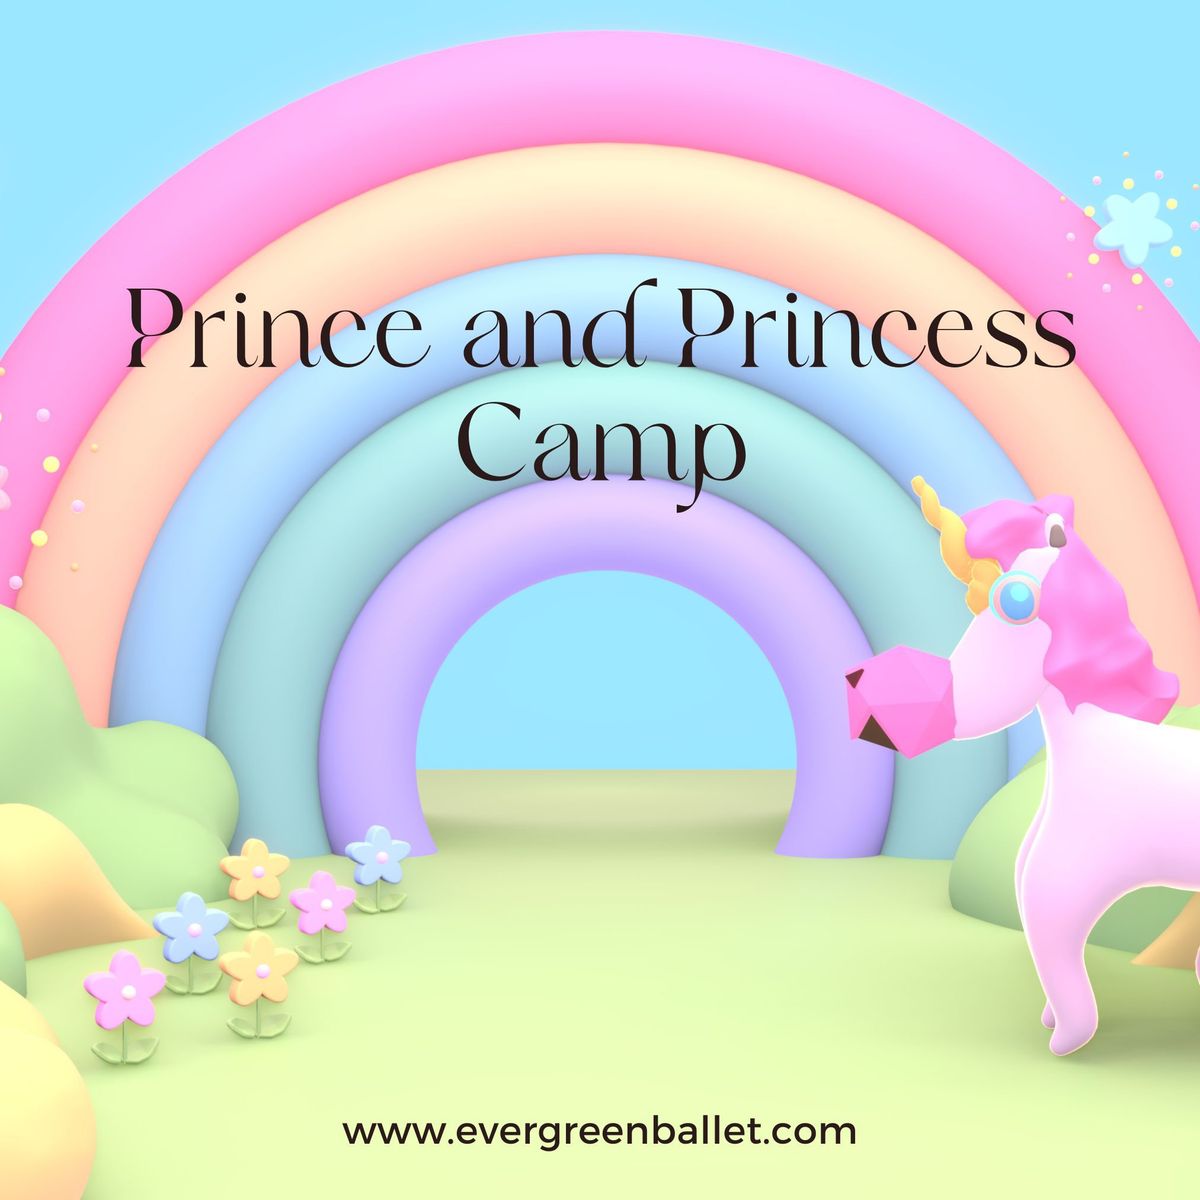 Prince and Princess Camp